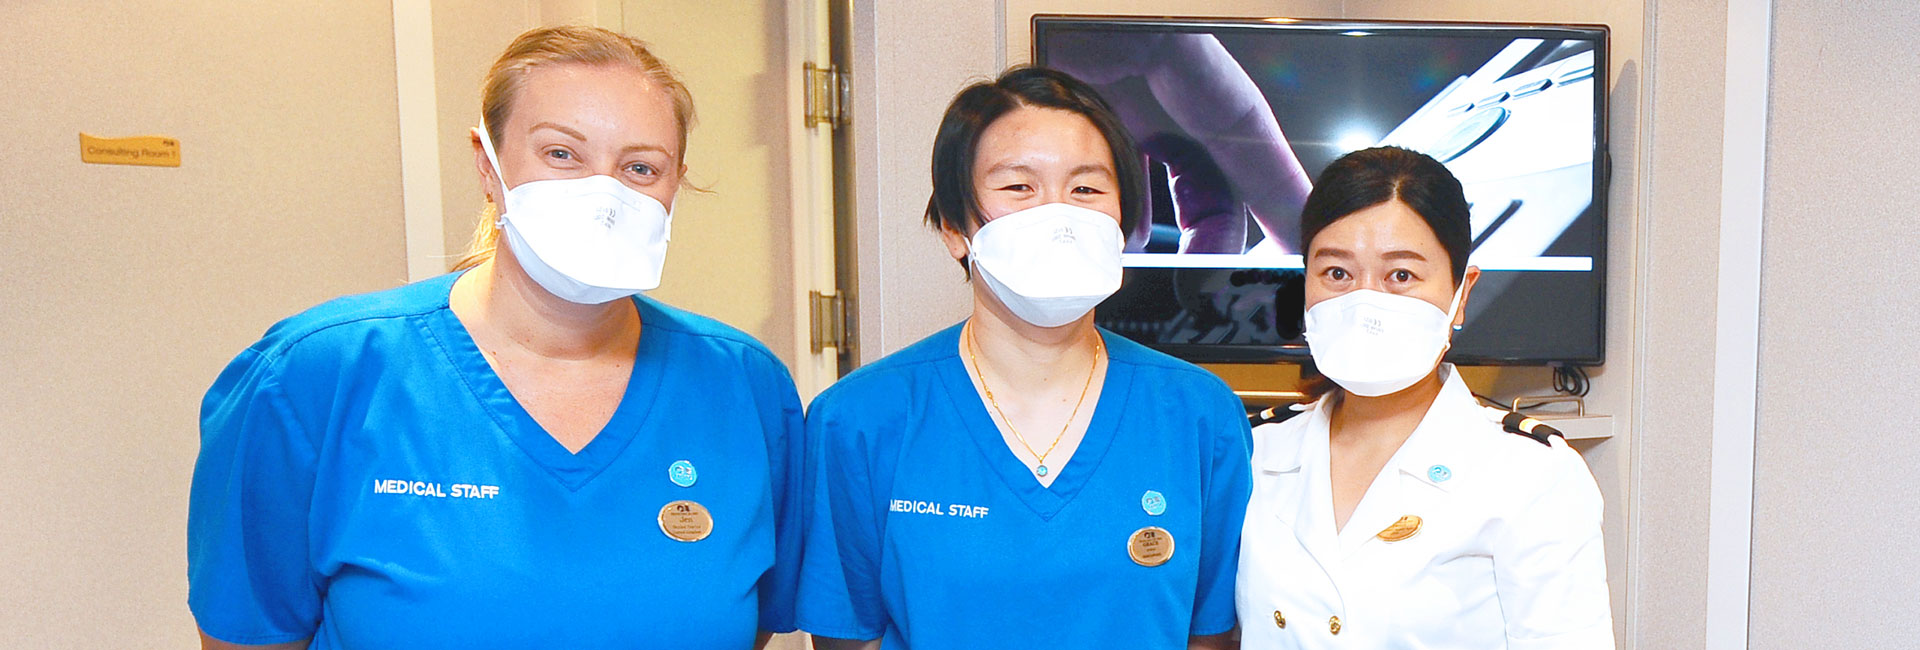 Cruise ship medical team: nurses and doctor